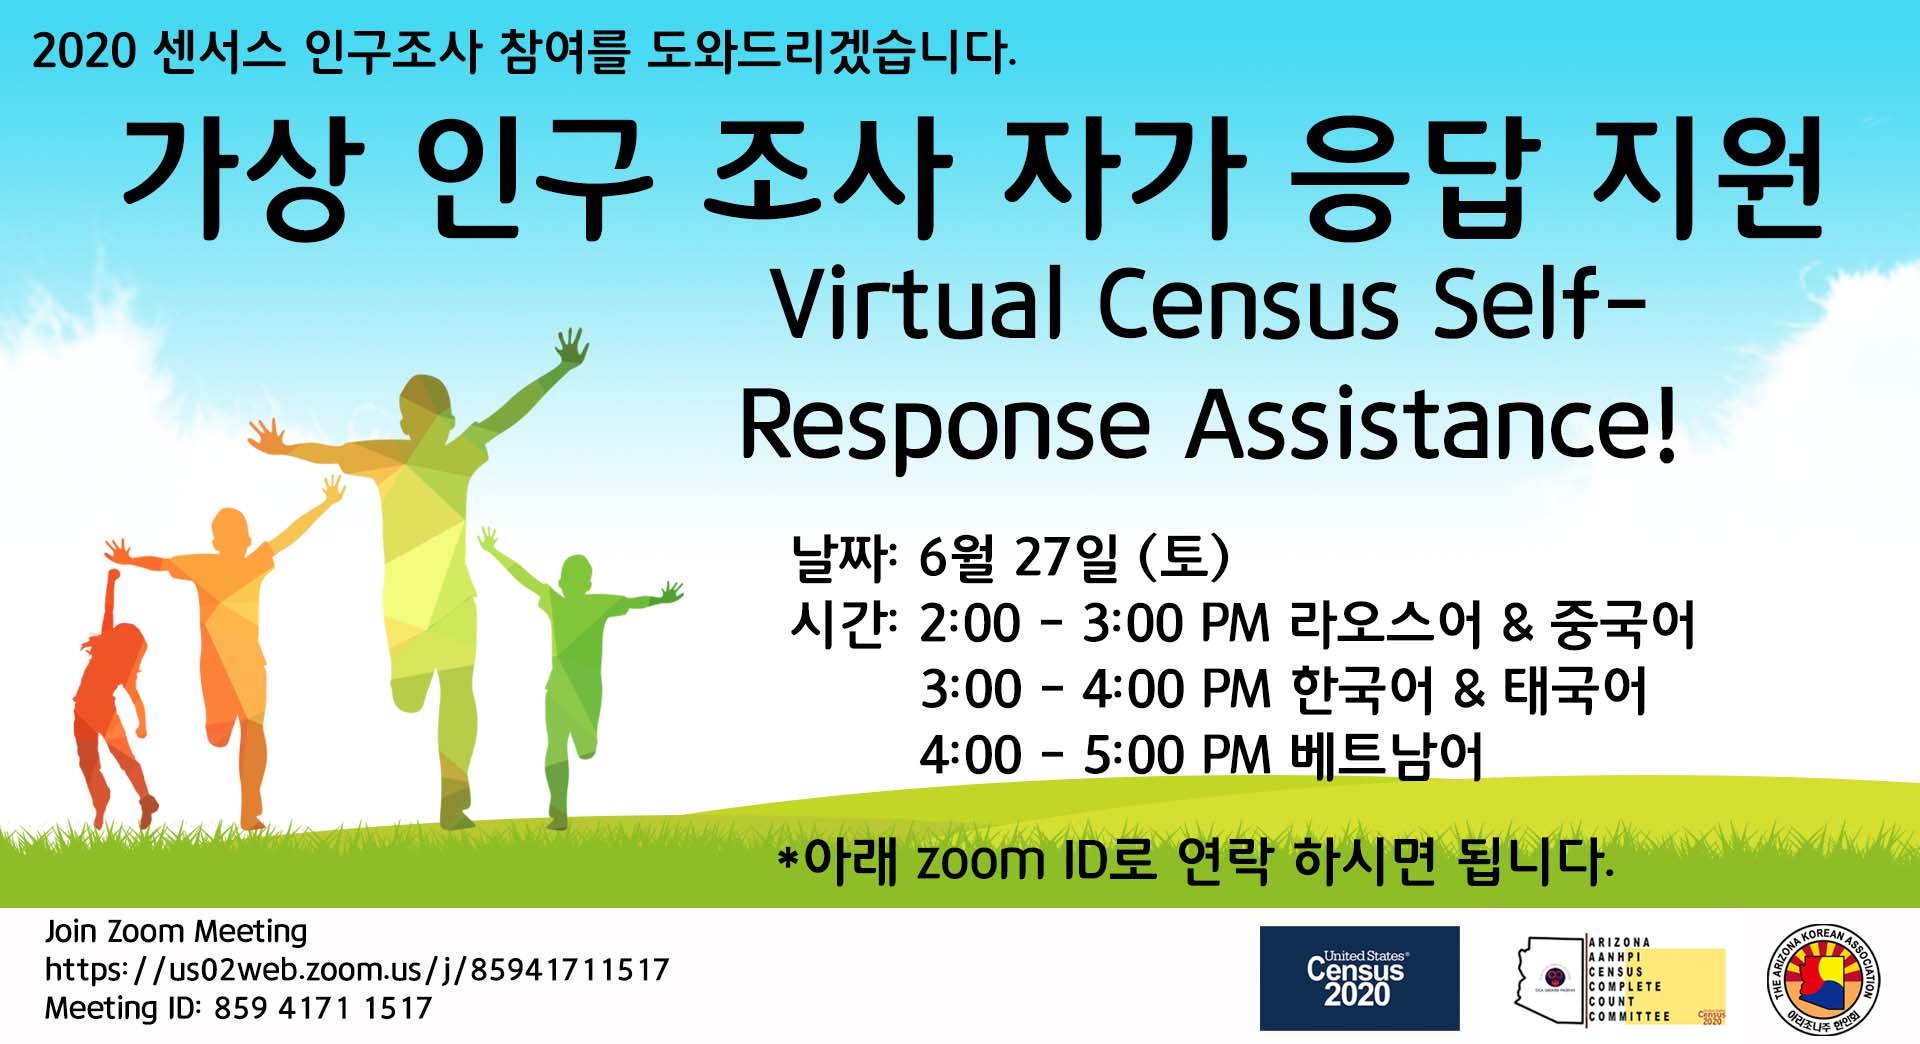 Virtual Census Self-Response Assistance.jpg